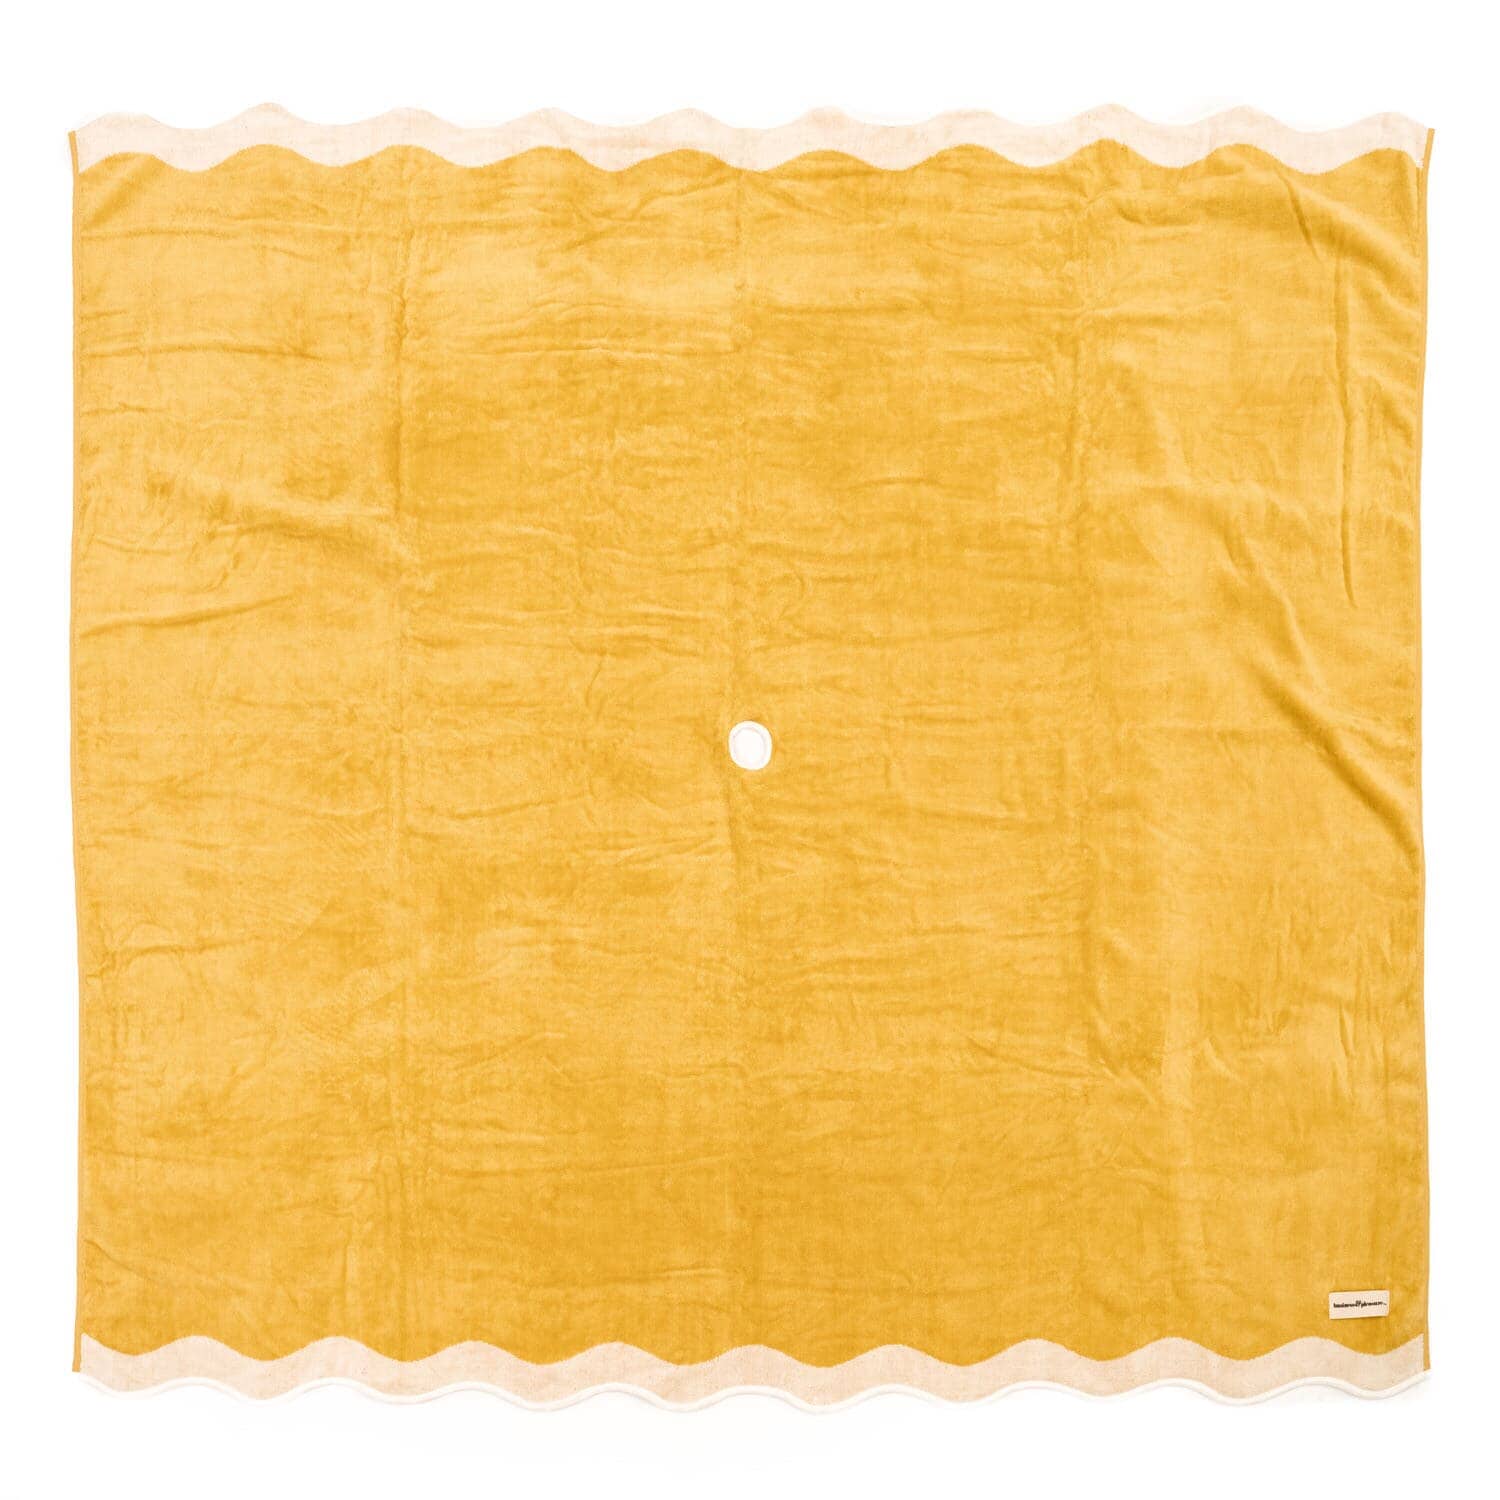 Studio image of mimosa beach blanket